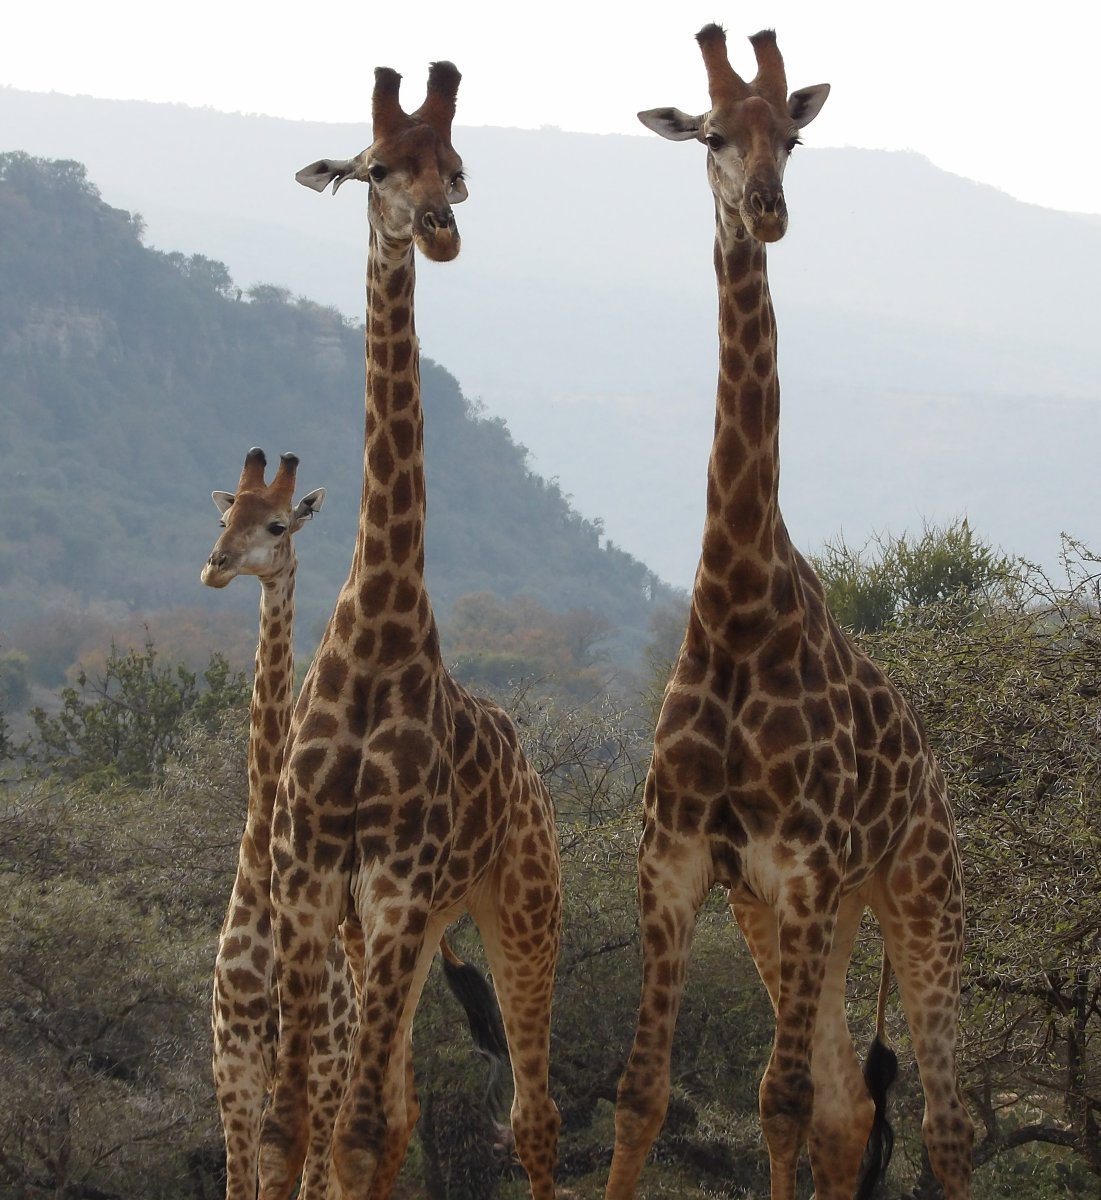 Three giraffes tower over landscape.